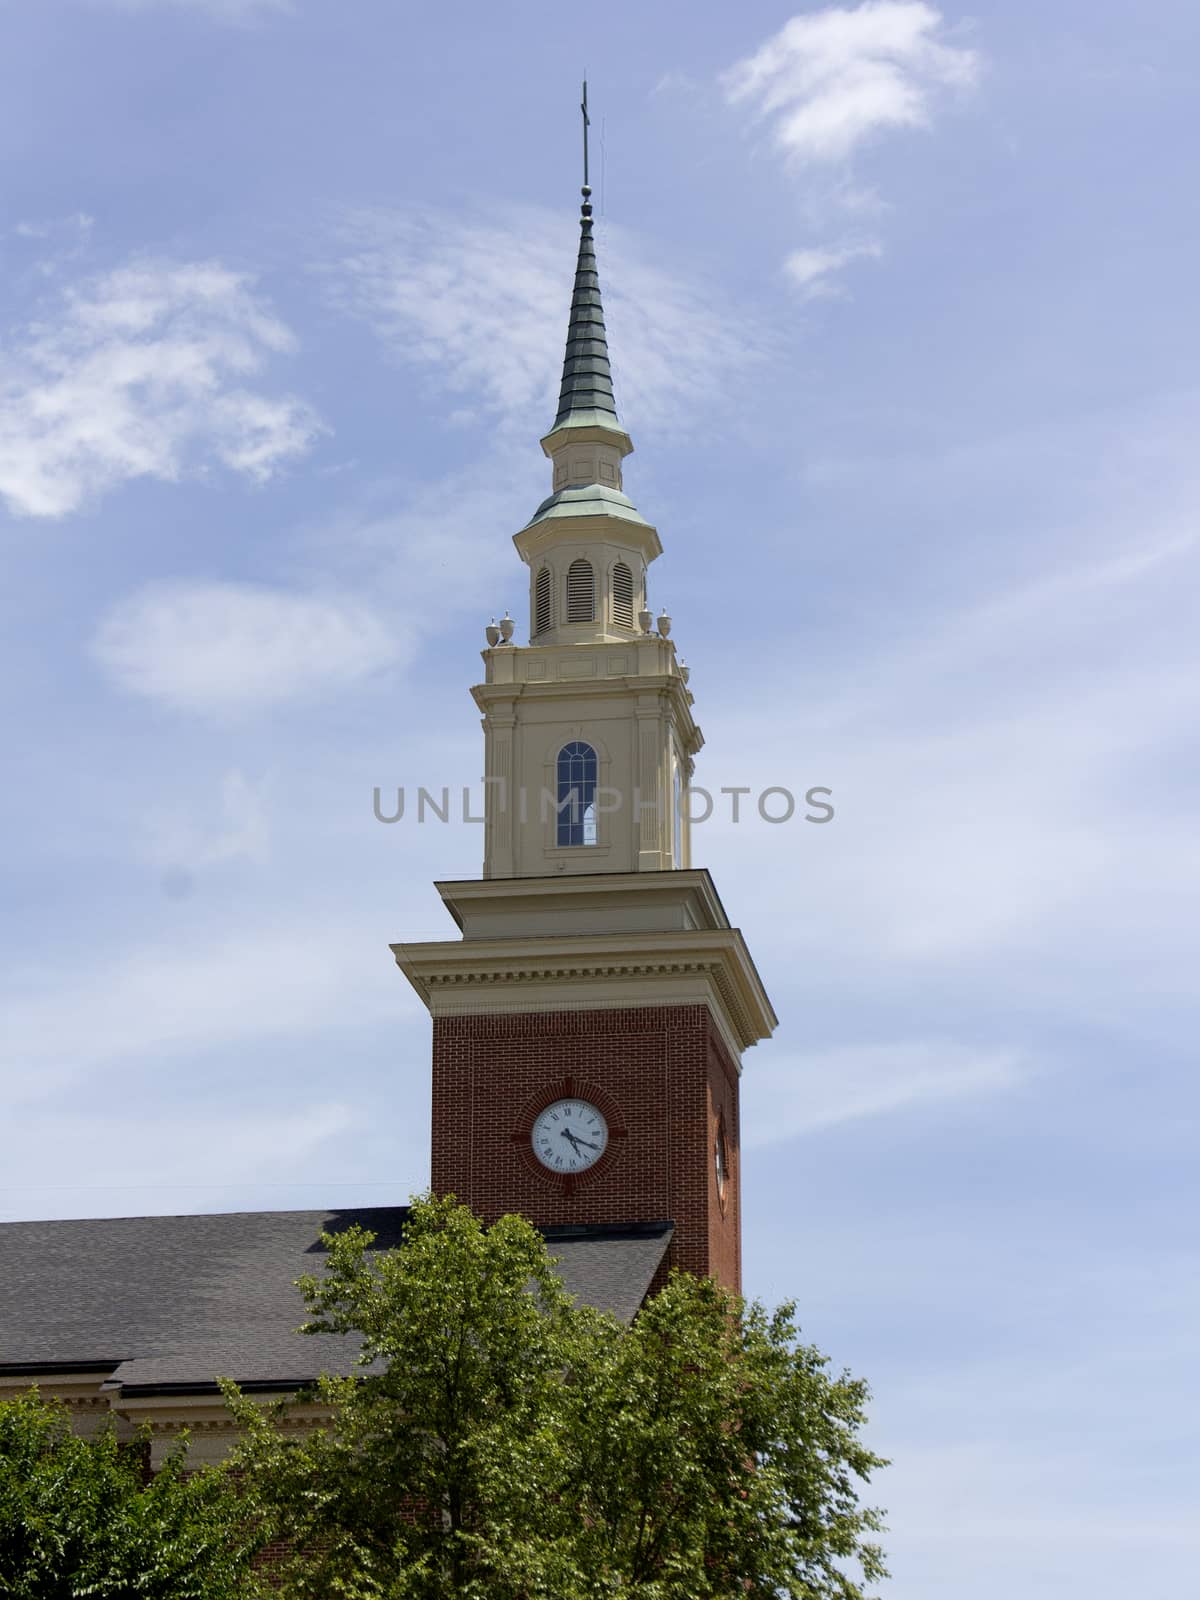 Church steeple with clock by CharlieFloyd